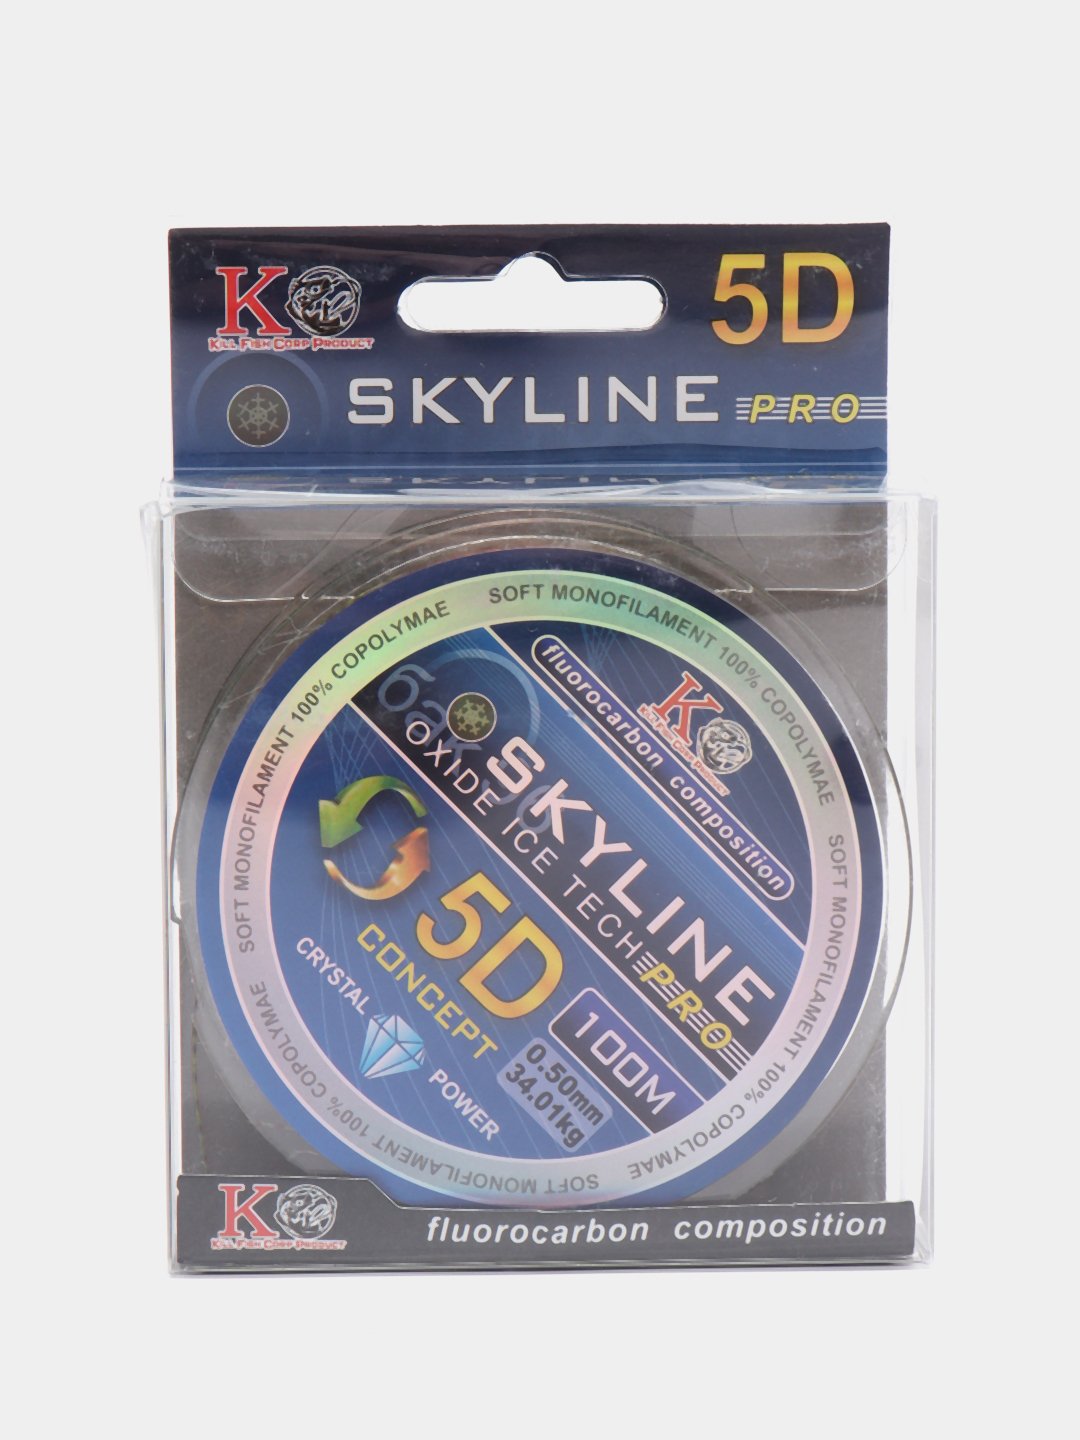  рыболовная Skyline 5D, флюрокарбон, монофильная, прозрачная для .